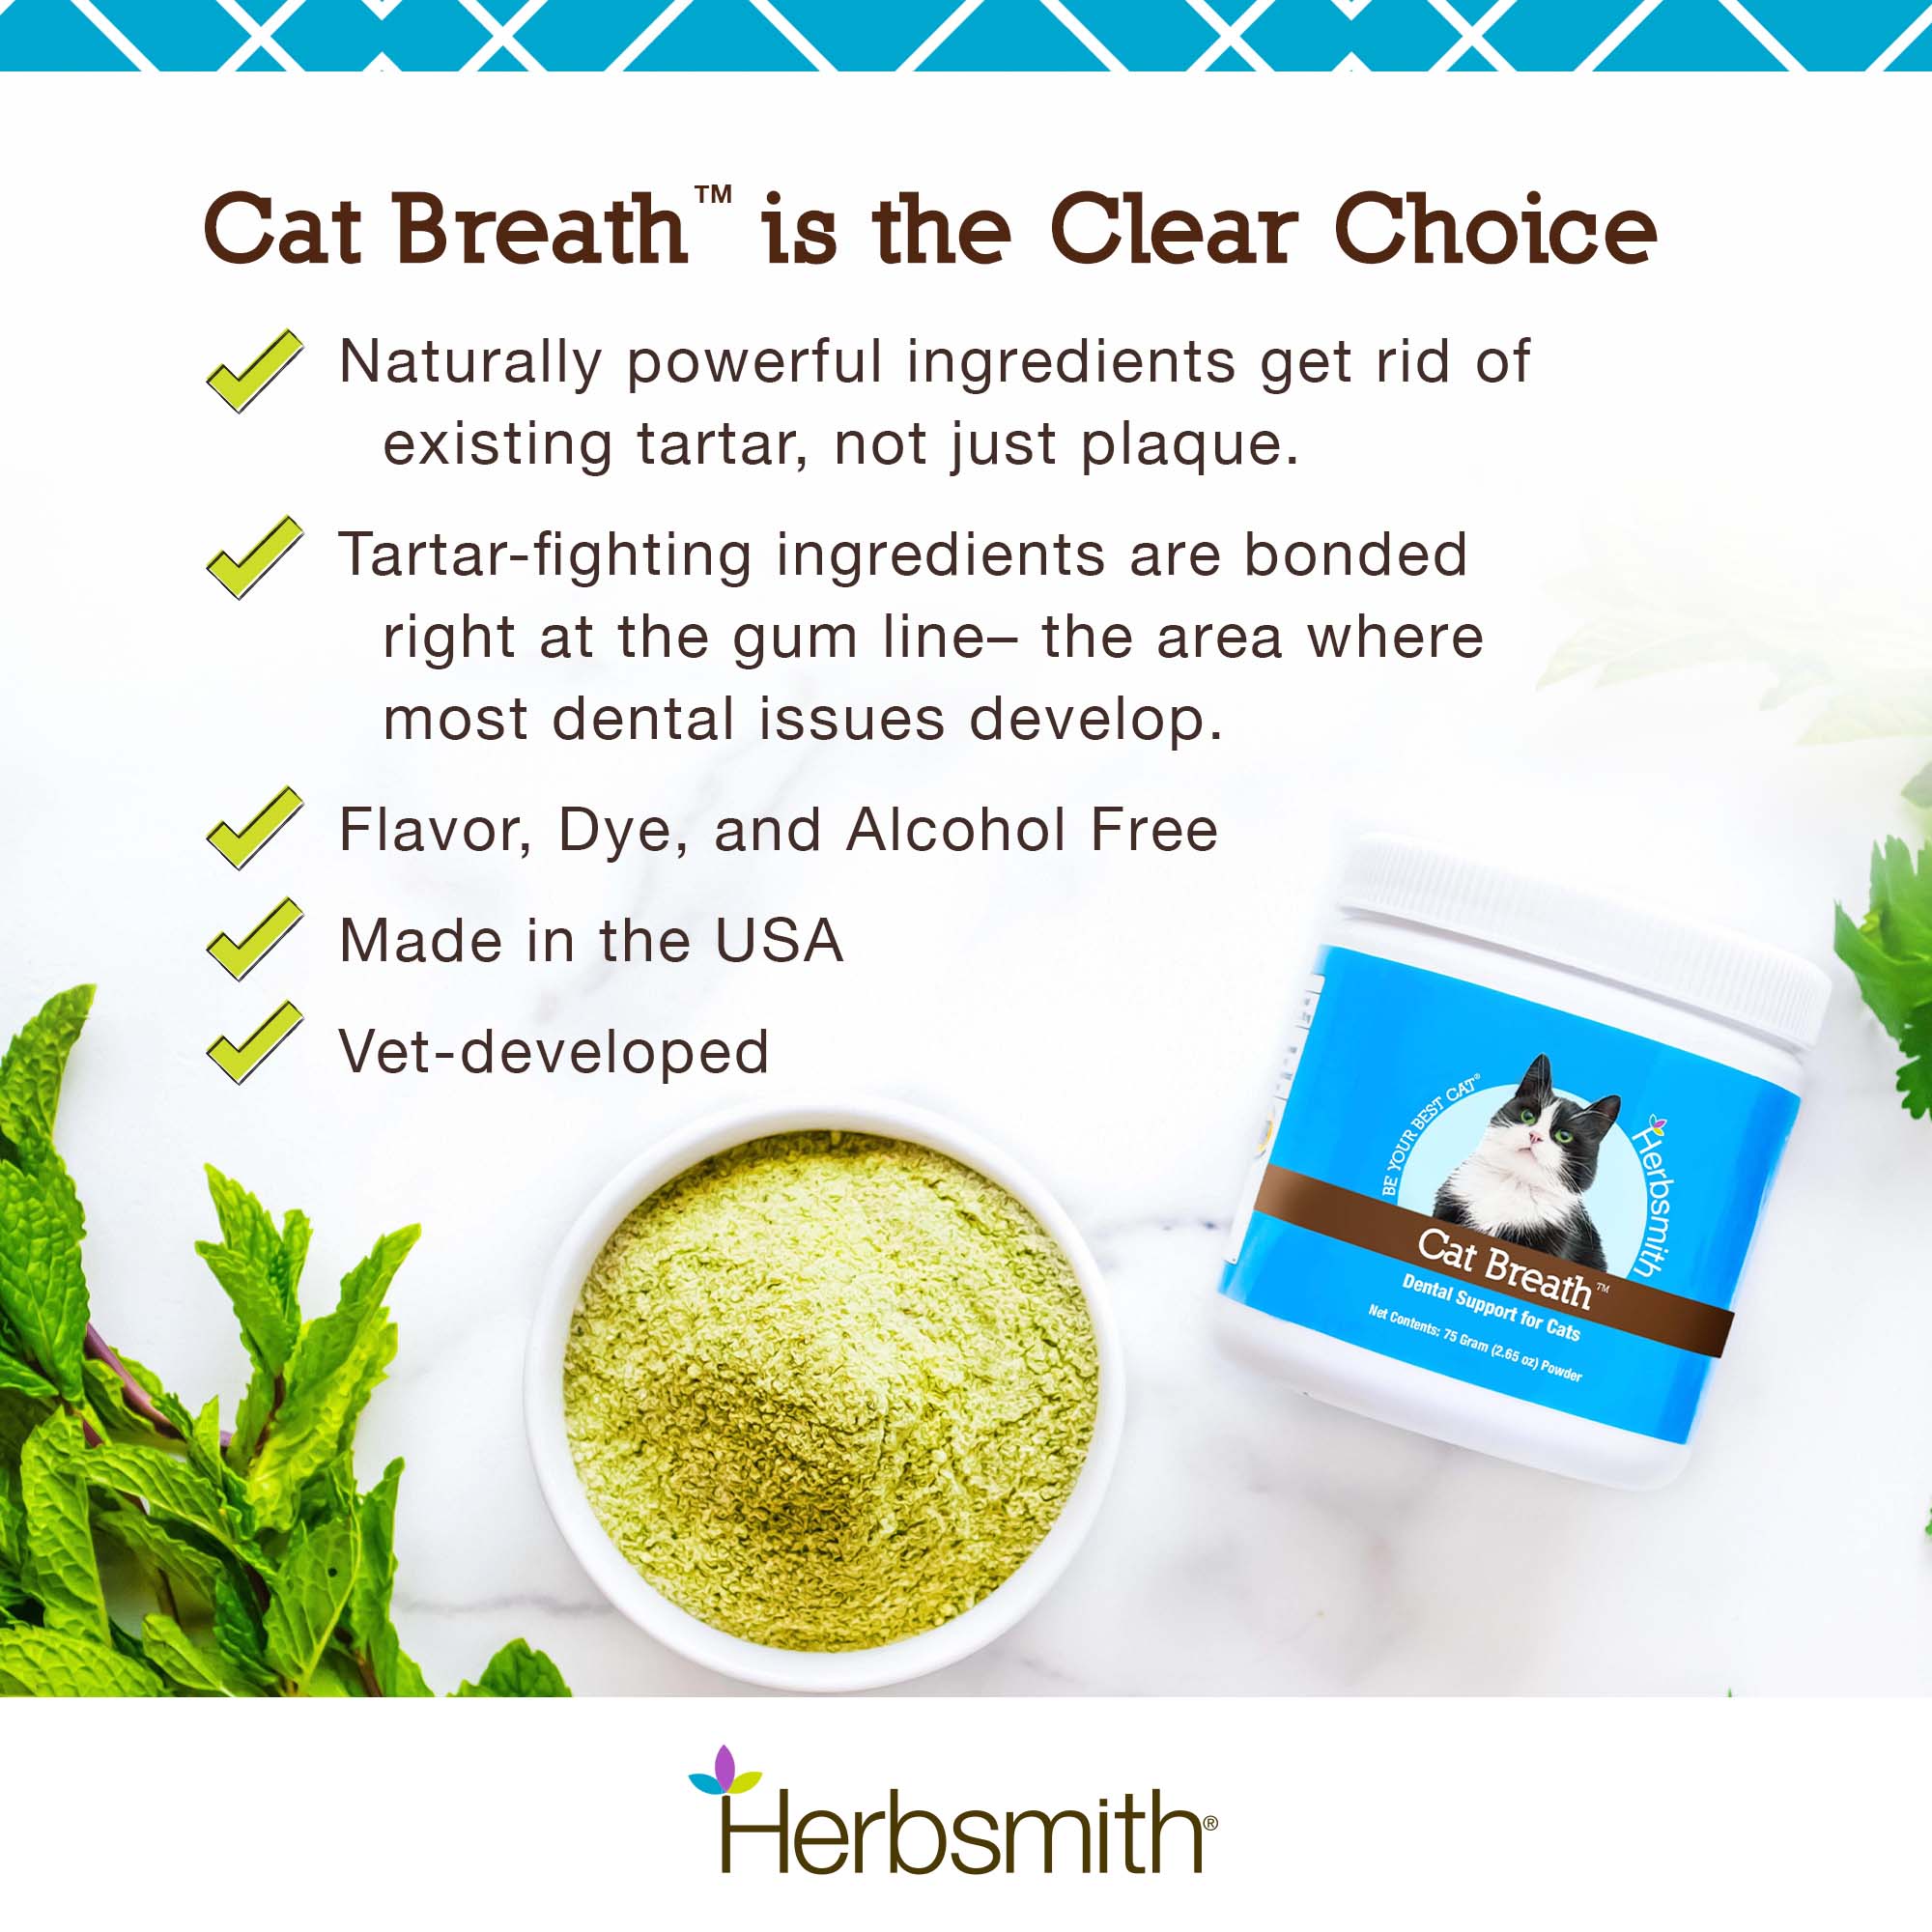 0-herbsmith-amazon-art-cat breath